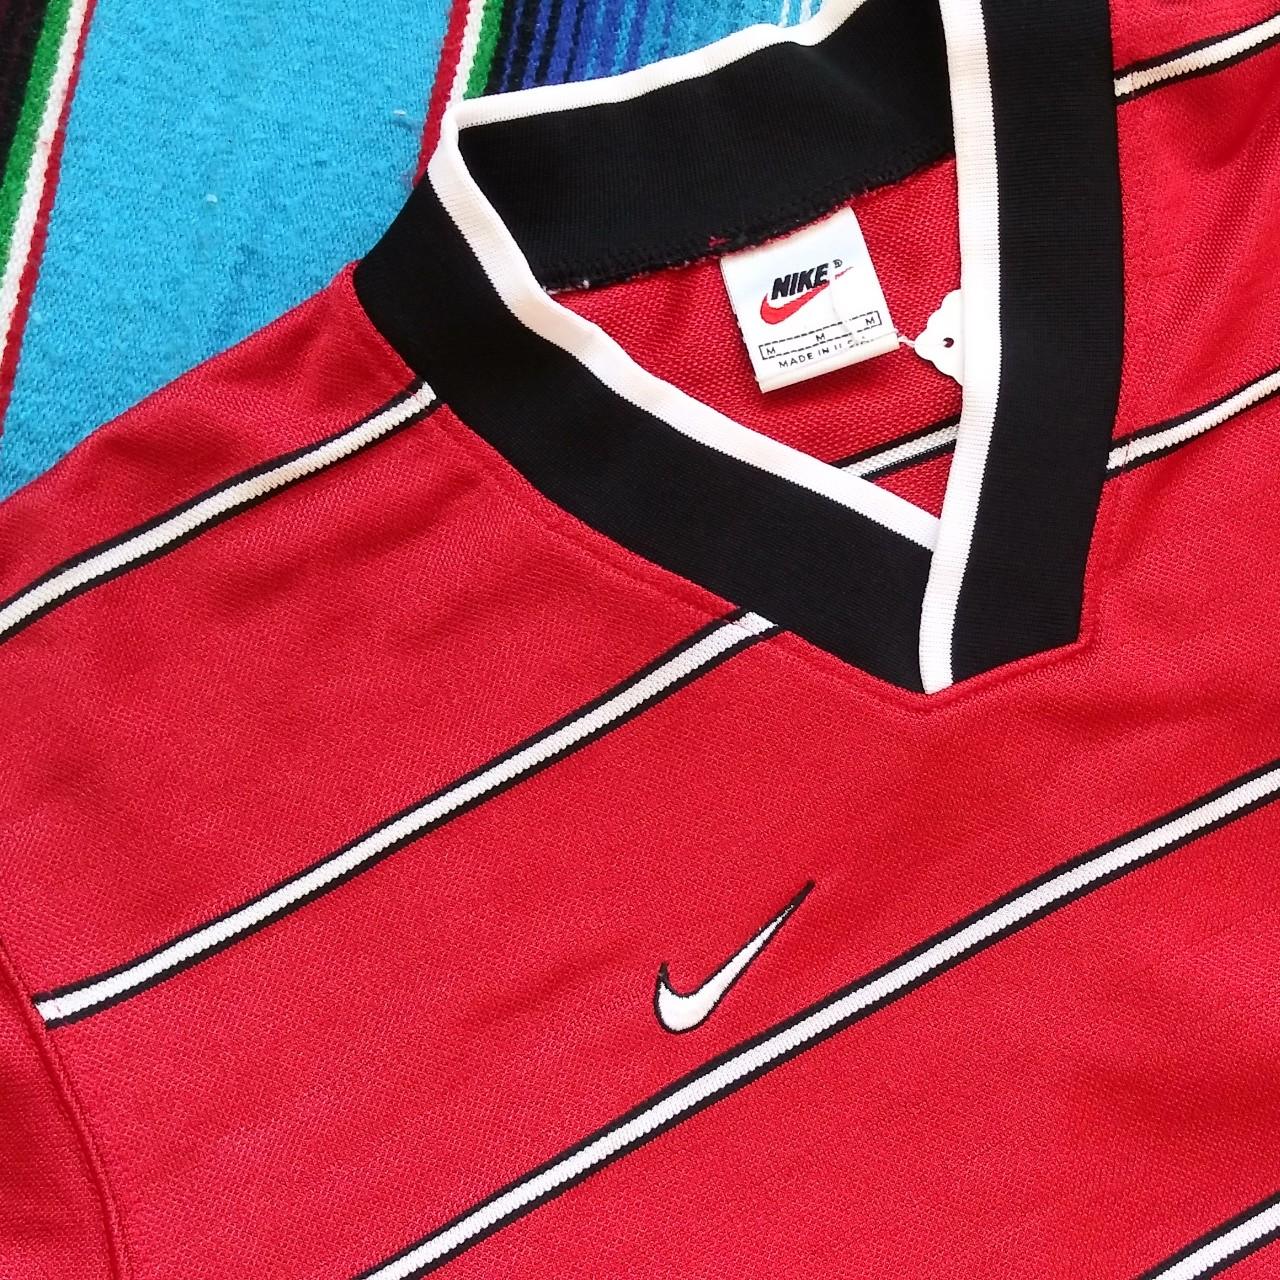 Vintage Nike Team Sports Soccer jersey. Men's